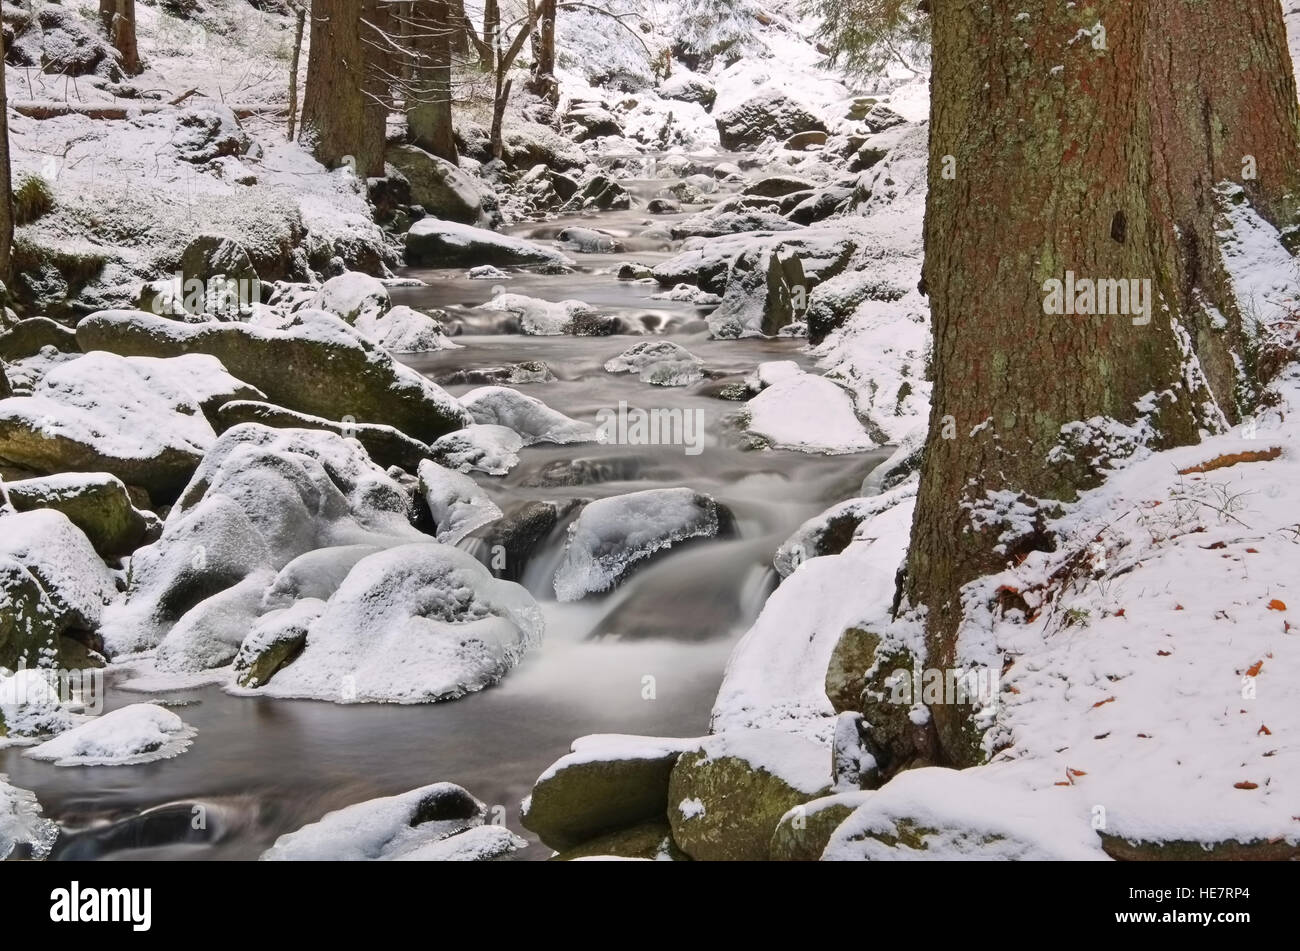 Gruenbach im Riesengebirge im Winter - creek in the Giant Mountains in winter Stock Photo